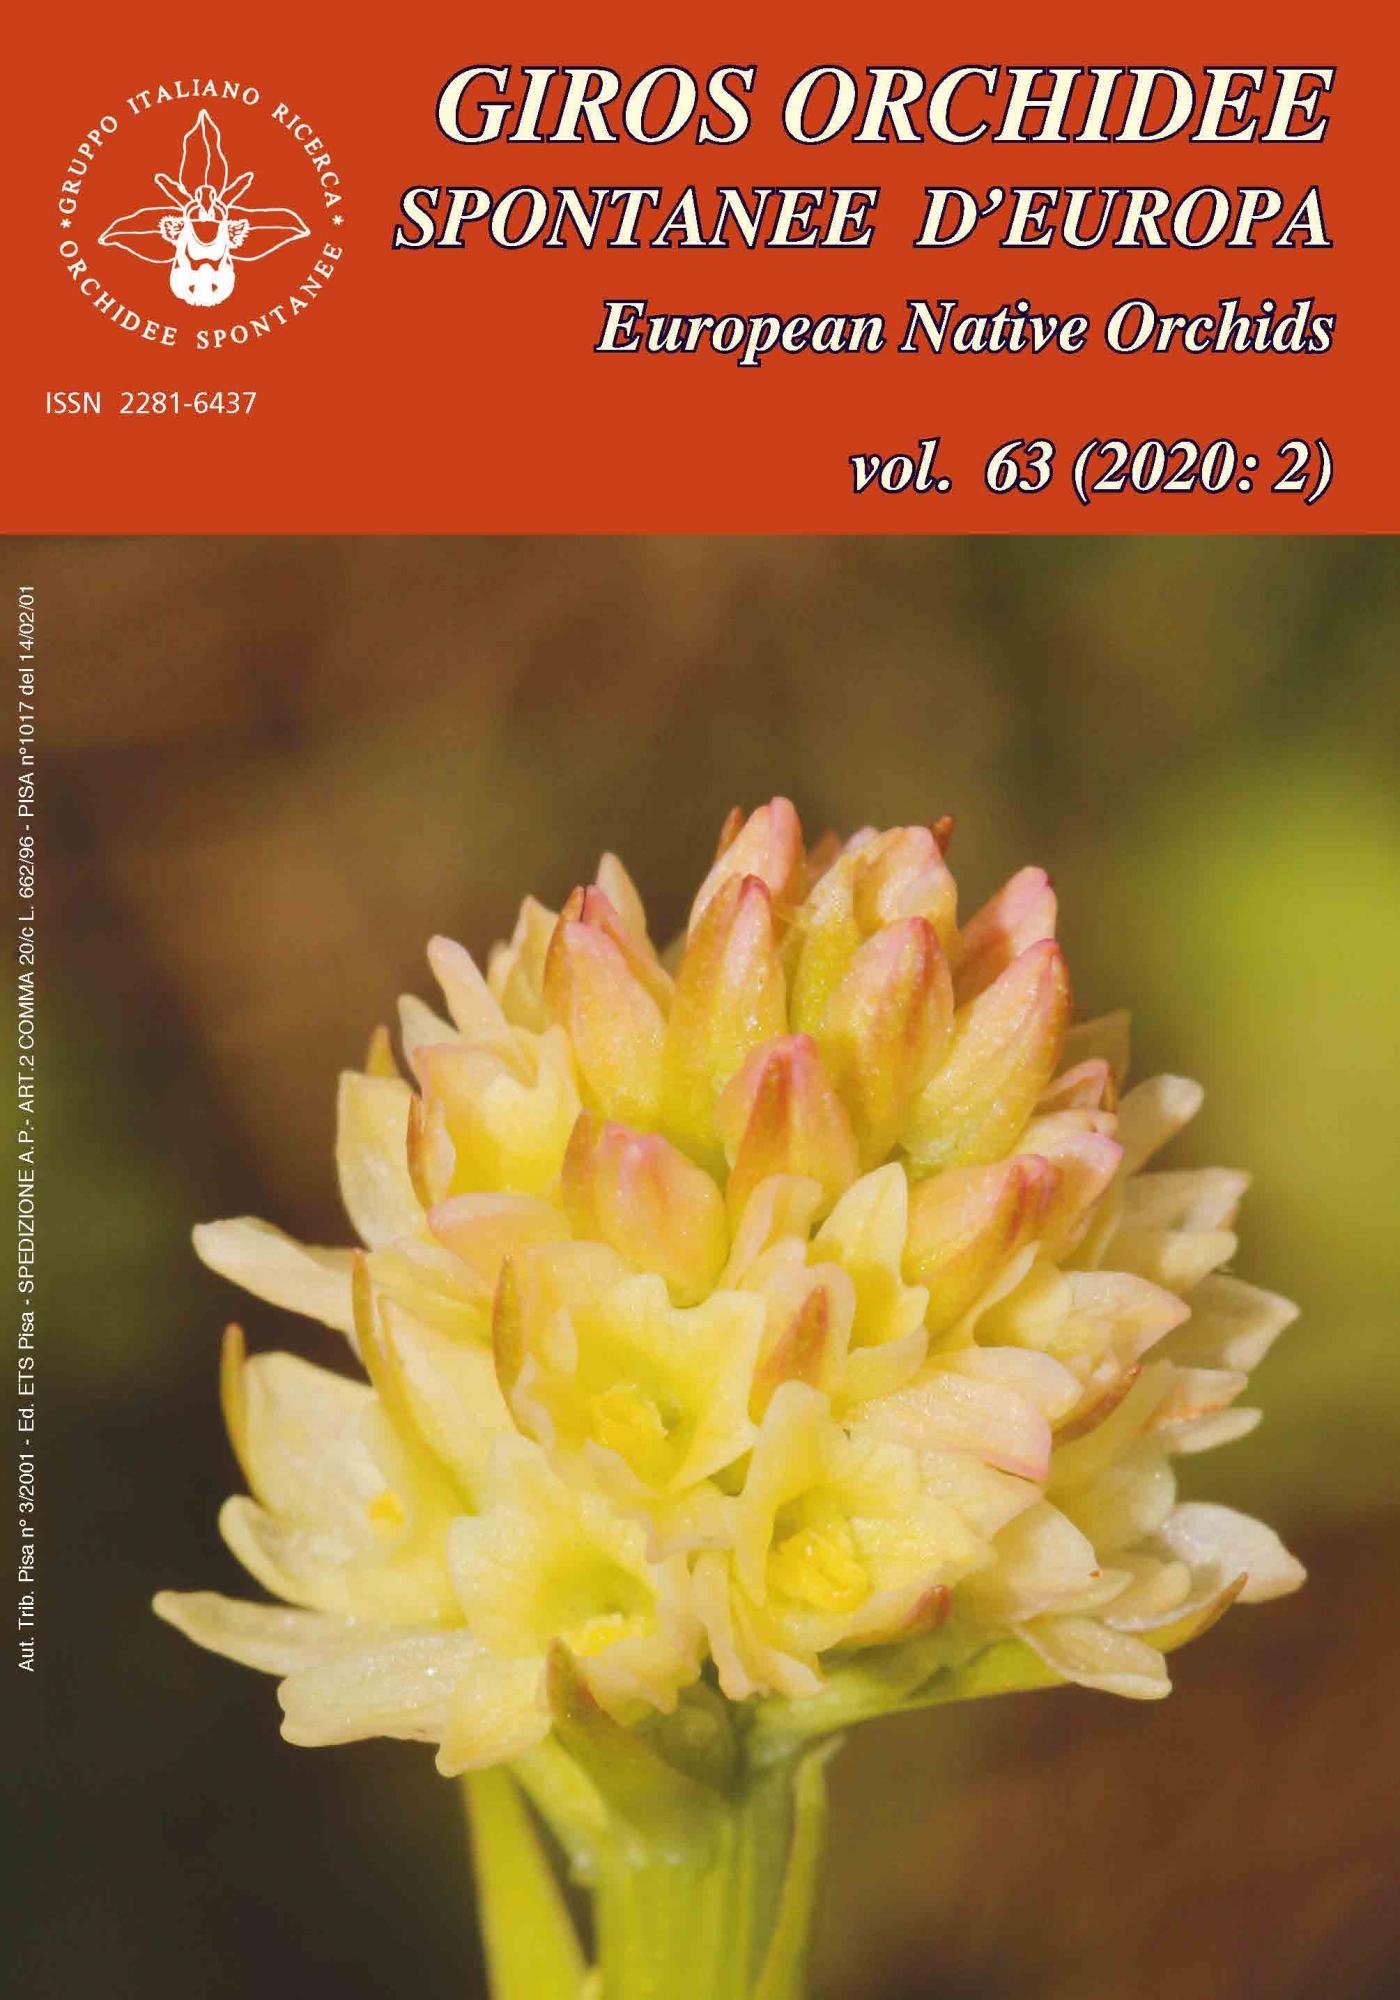 Orchidee spontanee d’Europa 2/2020.Rivista semestrale del GIROS